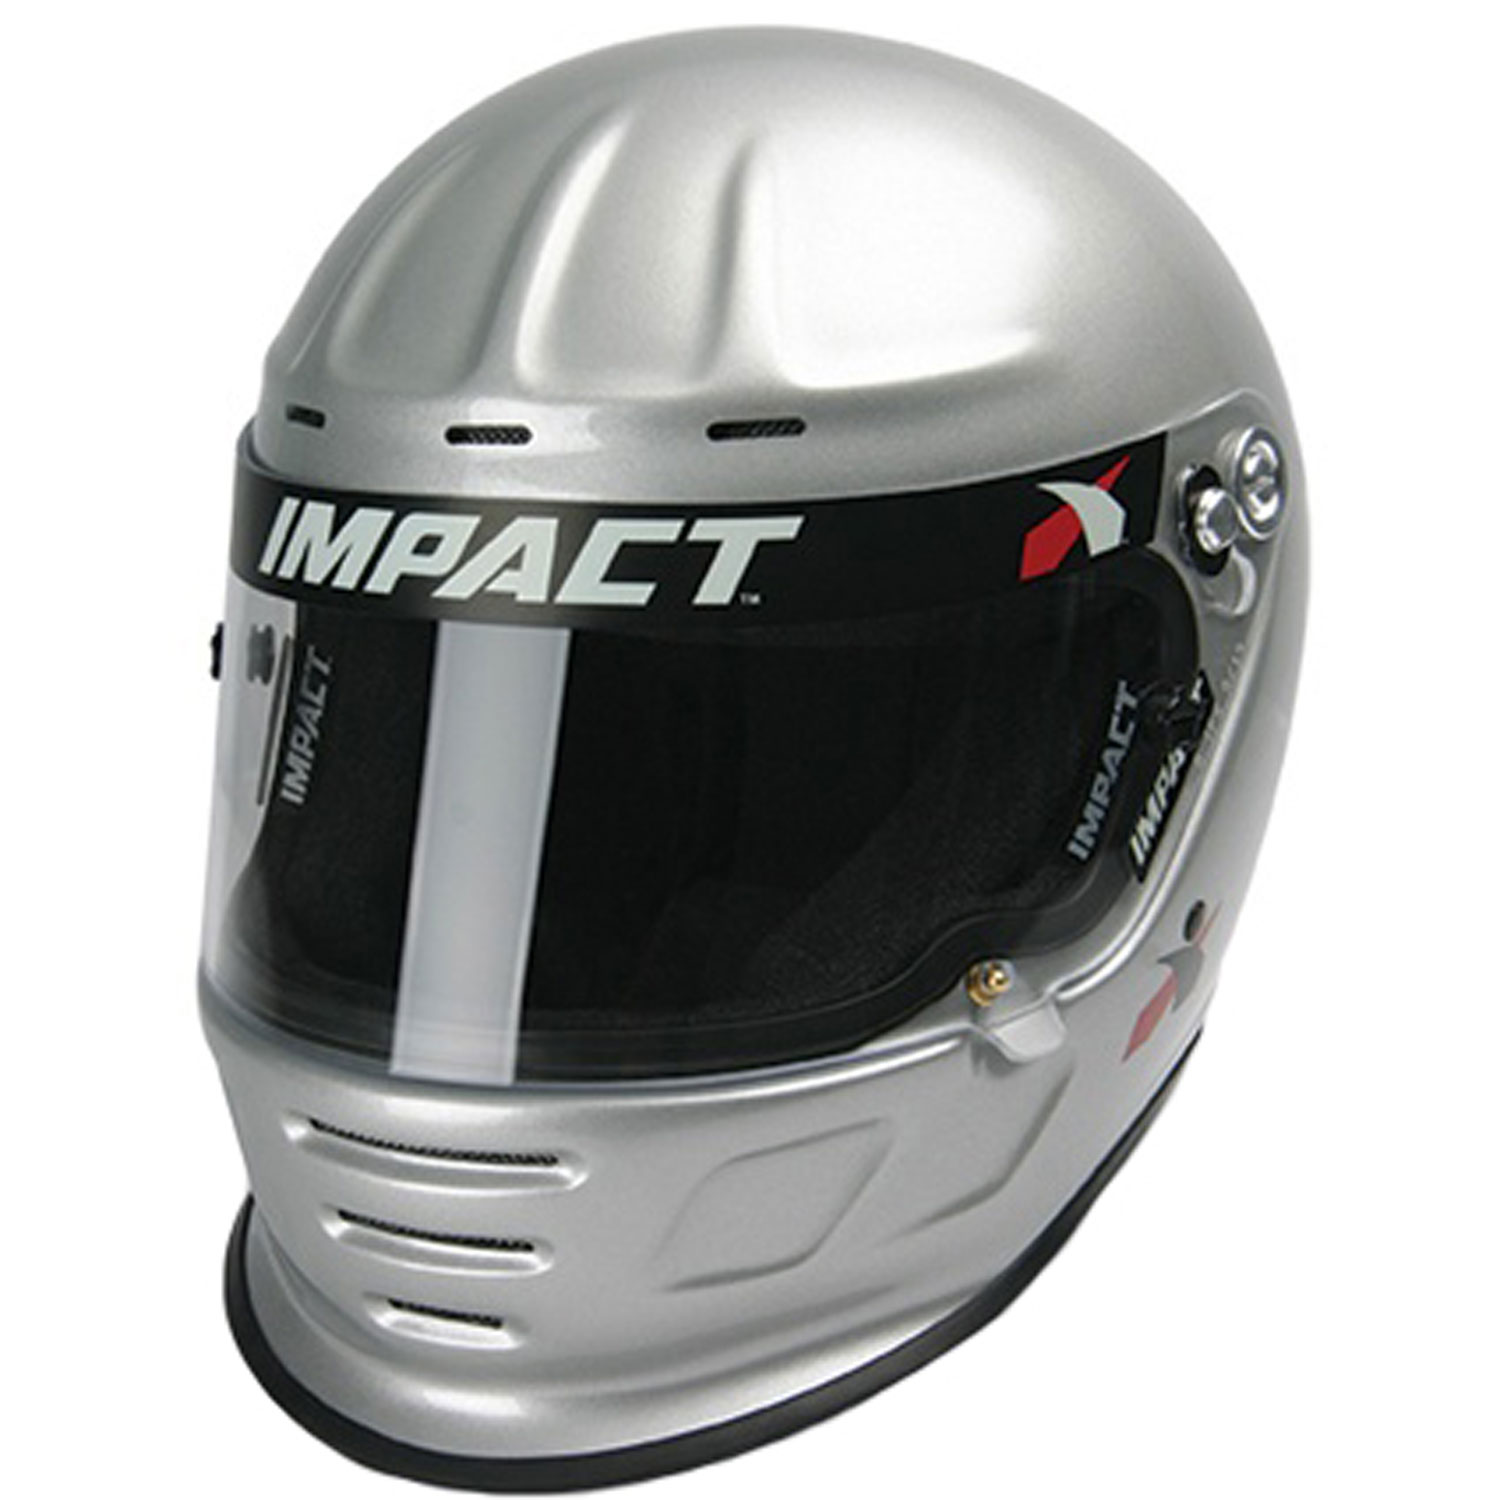 Draft TS Helmet SA2015 Certified